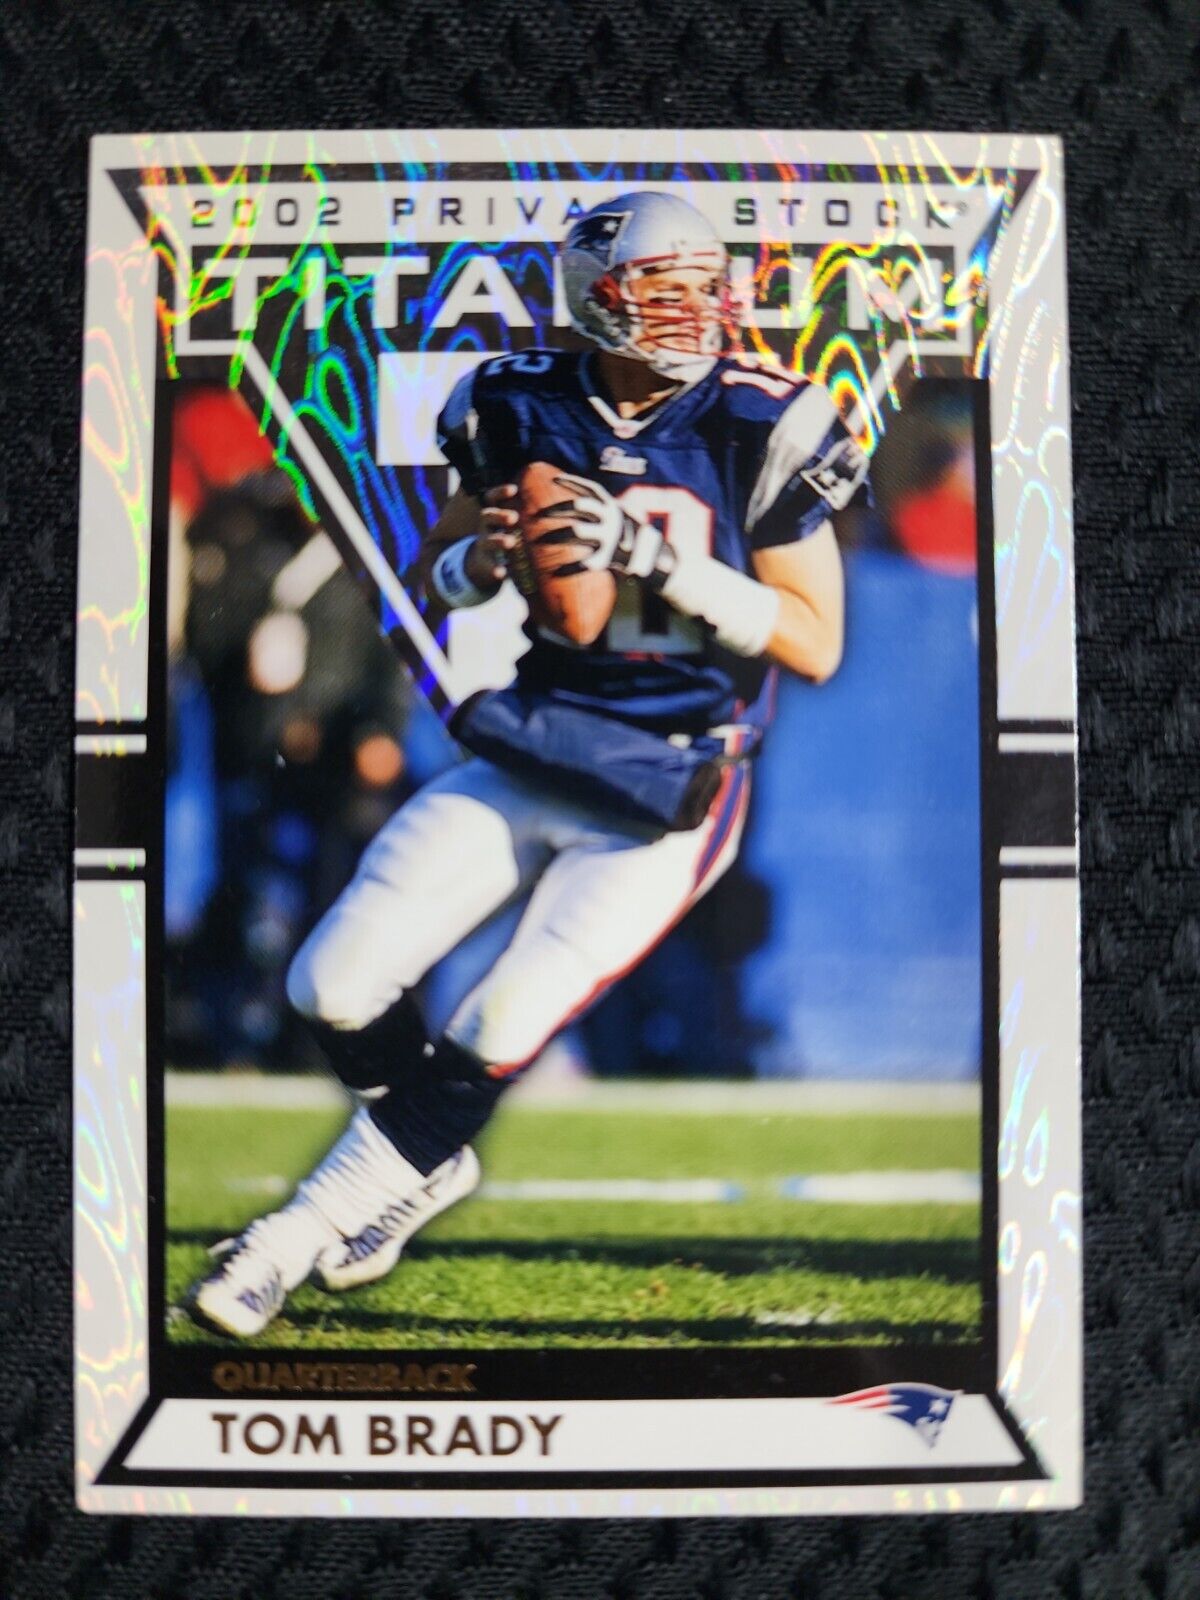 2002 Pacific Private Stock #58 Tom Brady Titanium  Patriots